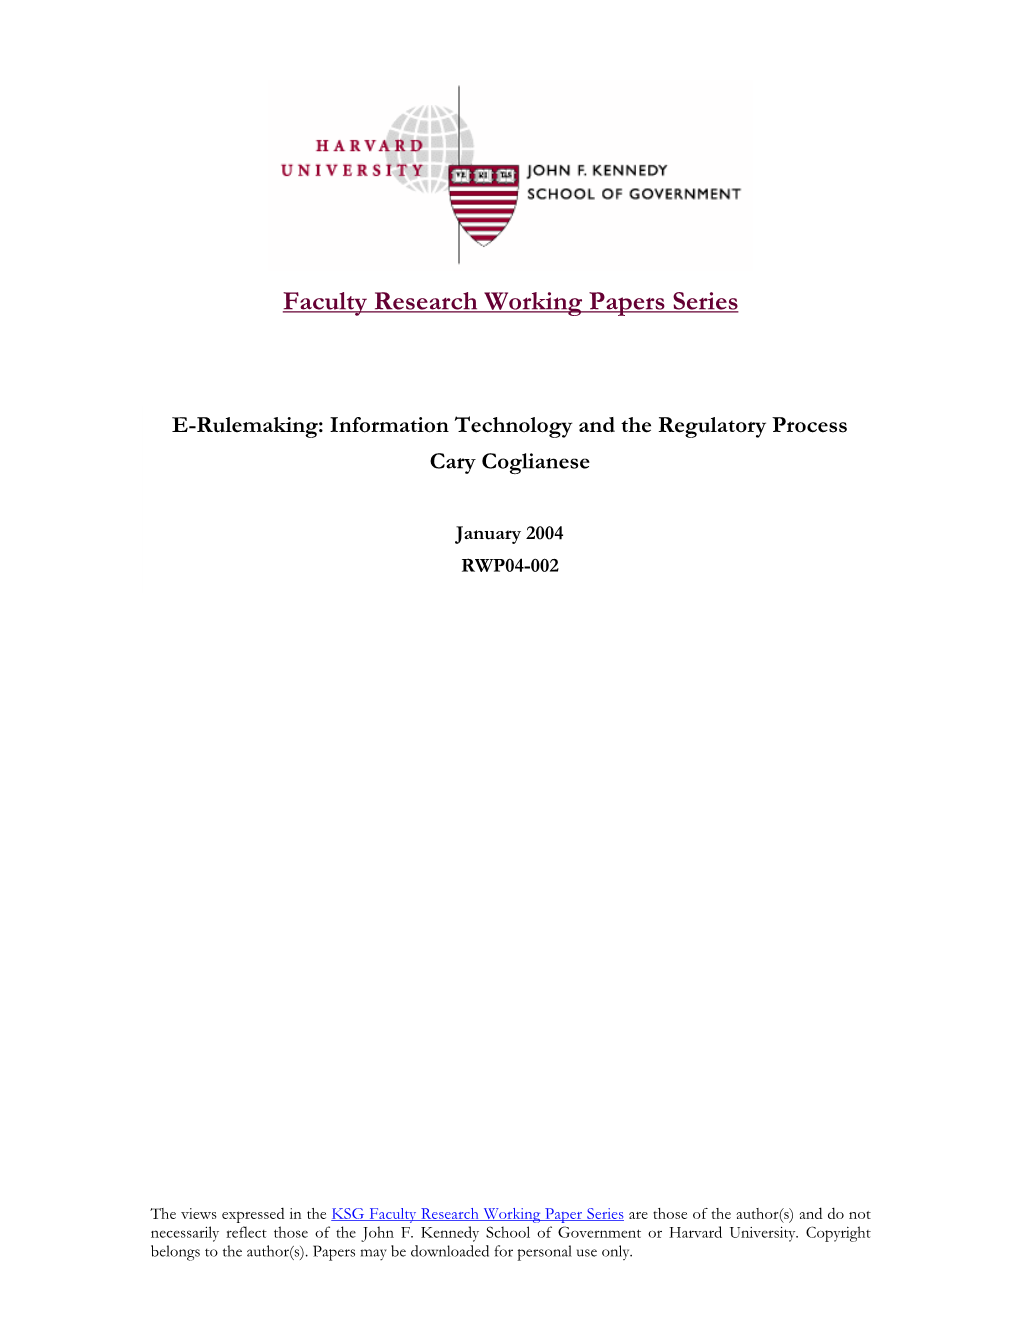 E-Rulemaking: Information Technology and the Regulatory Process Cary Coglianese